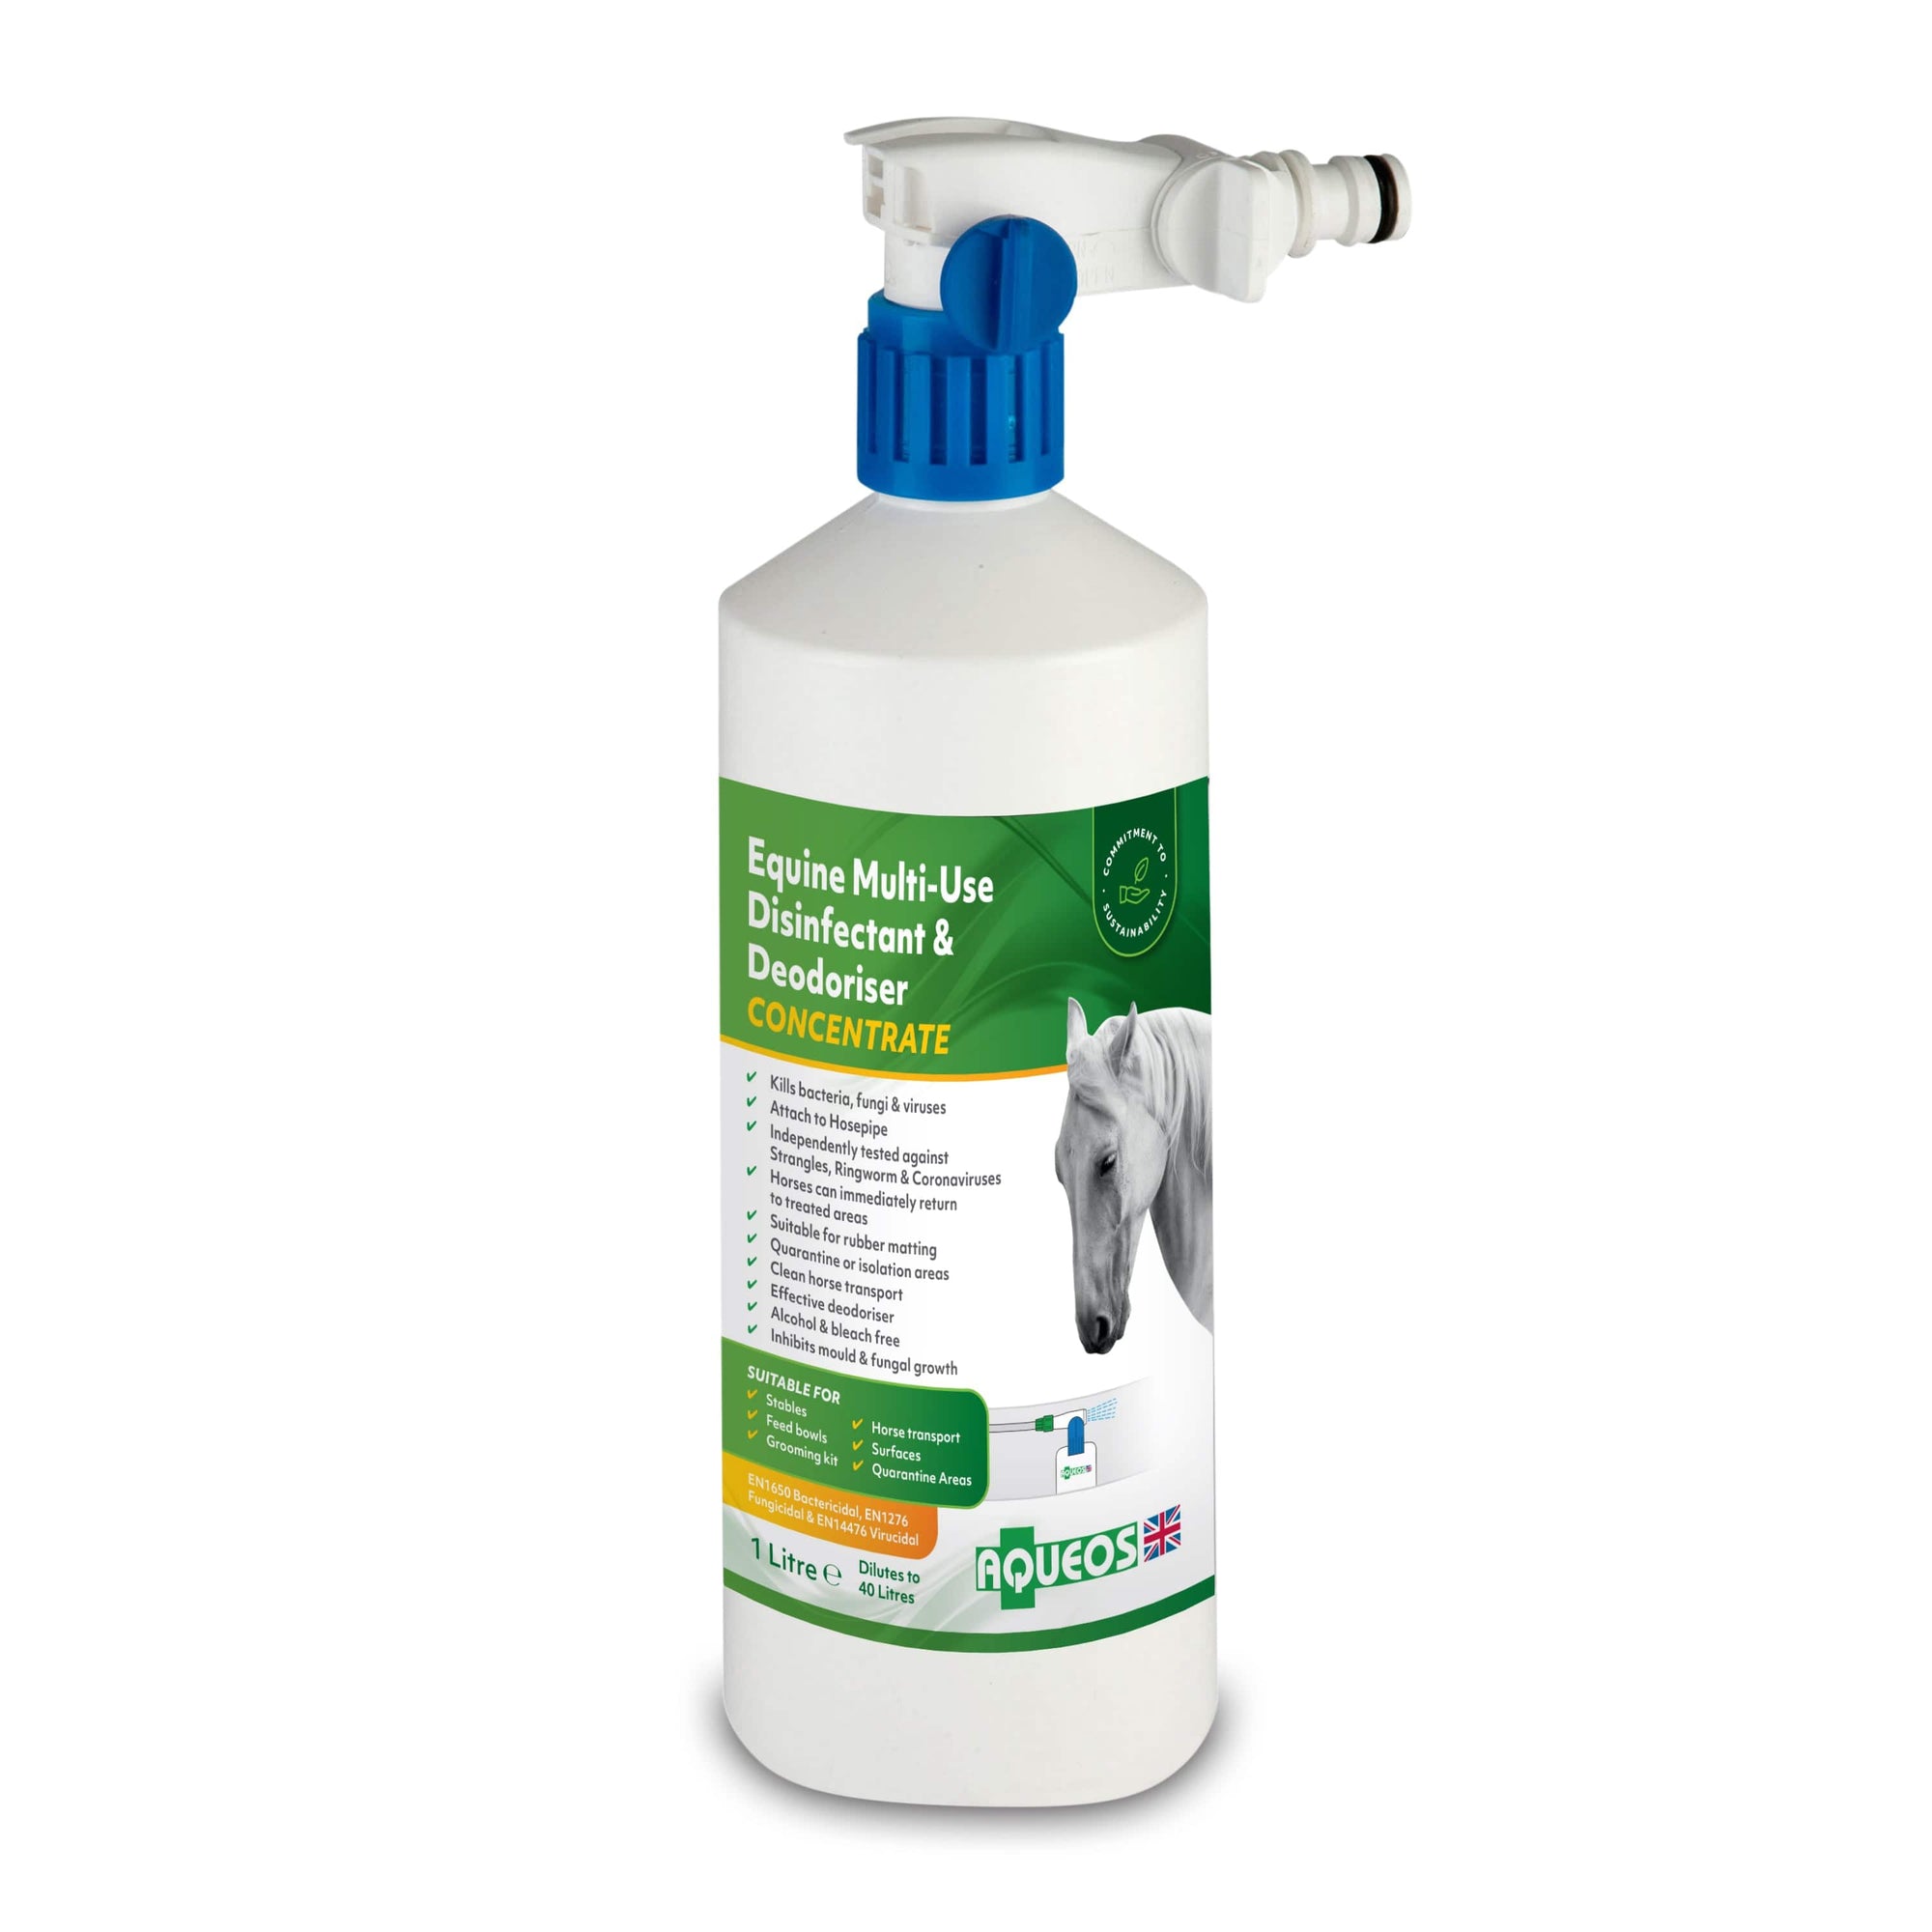 Aqueos stable & multi-use disinfectant